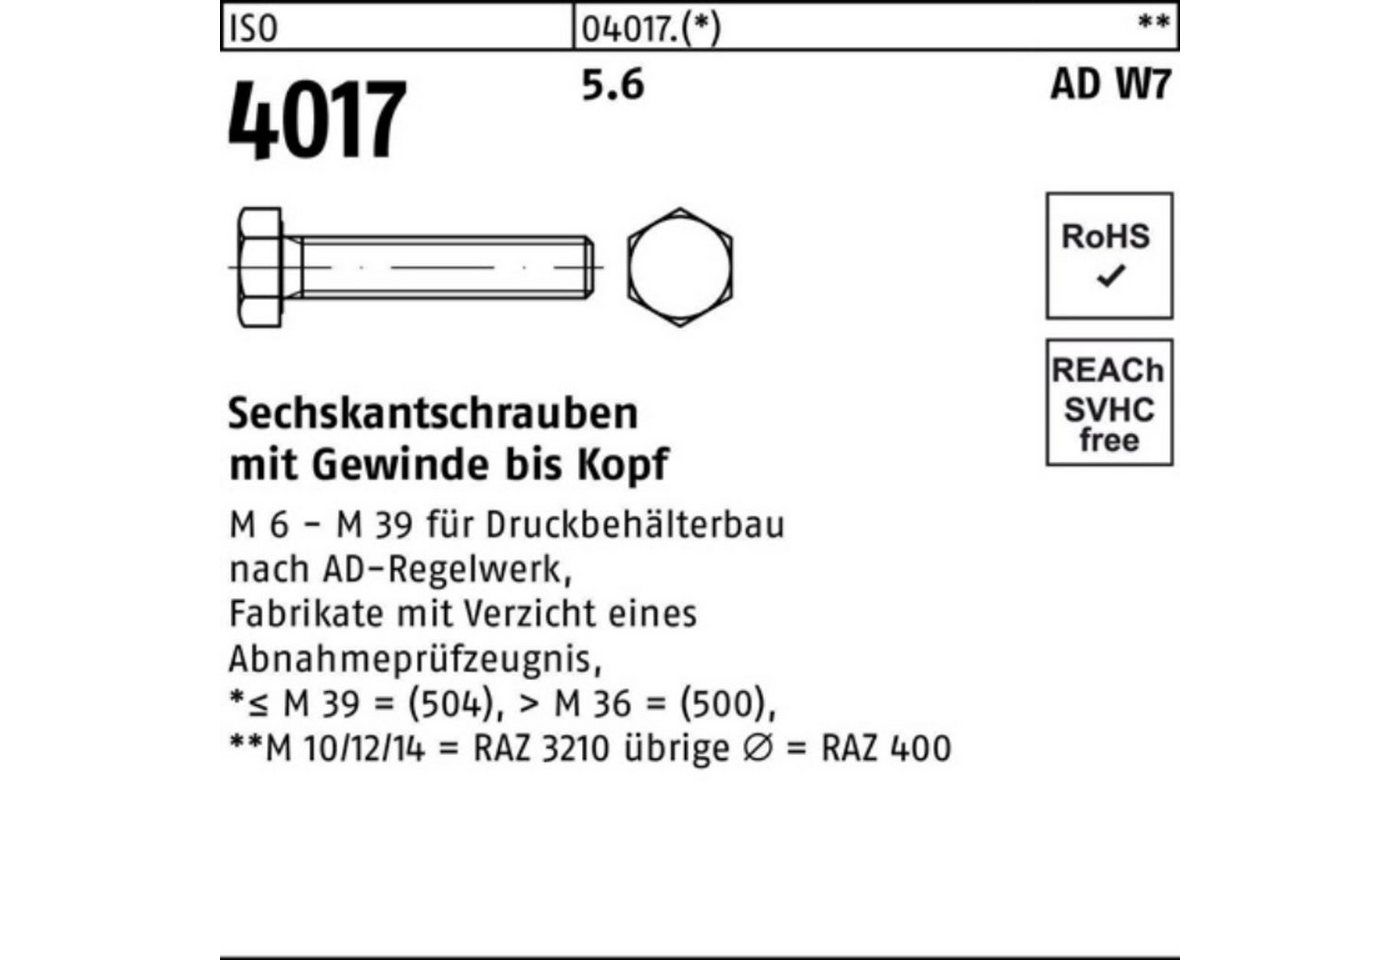 Bufab Sechskantschraube 100er Pack Sechskantschraube ISO 4017 VG M27x 120 5.6 AD W7 1 Stück I von Bufab